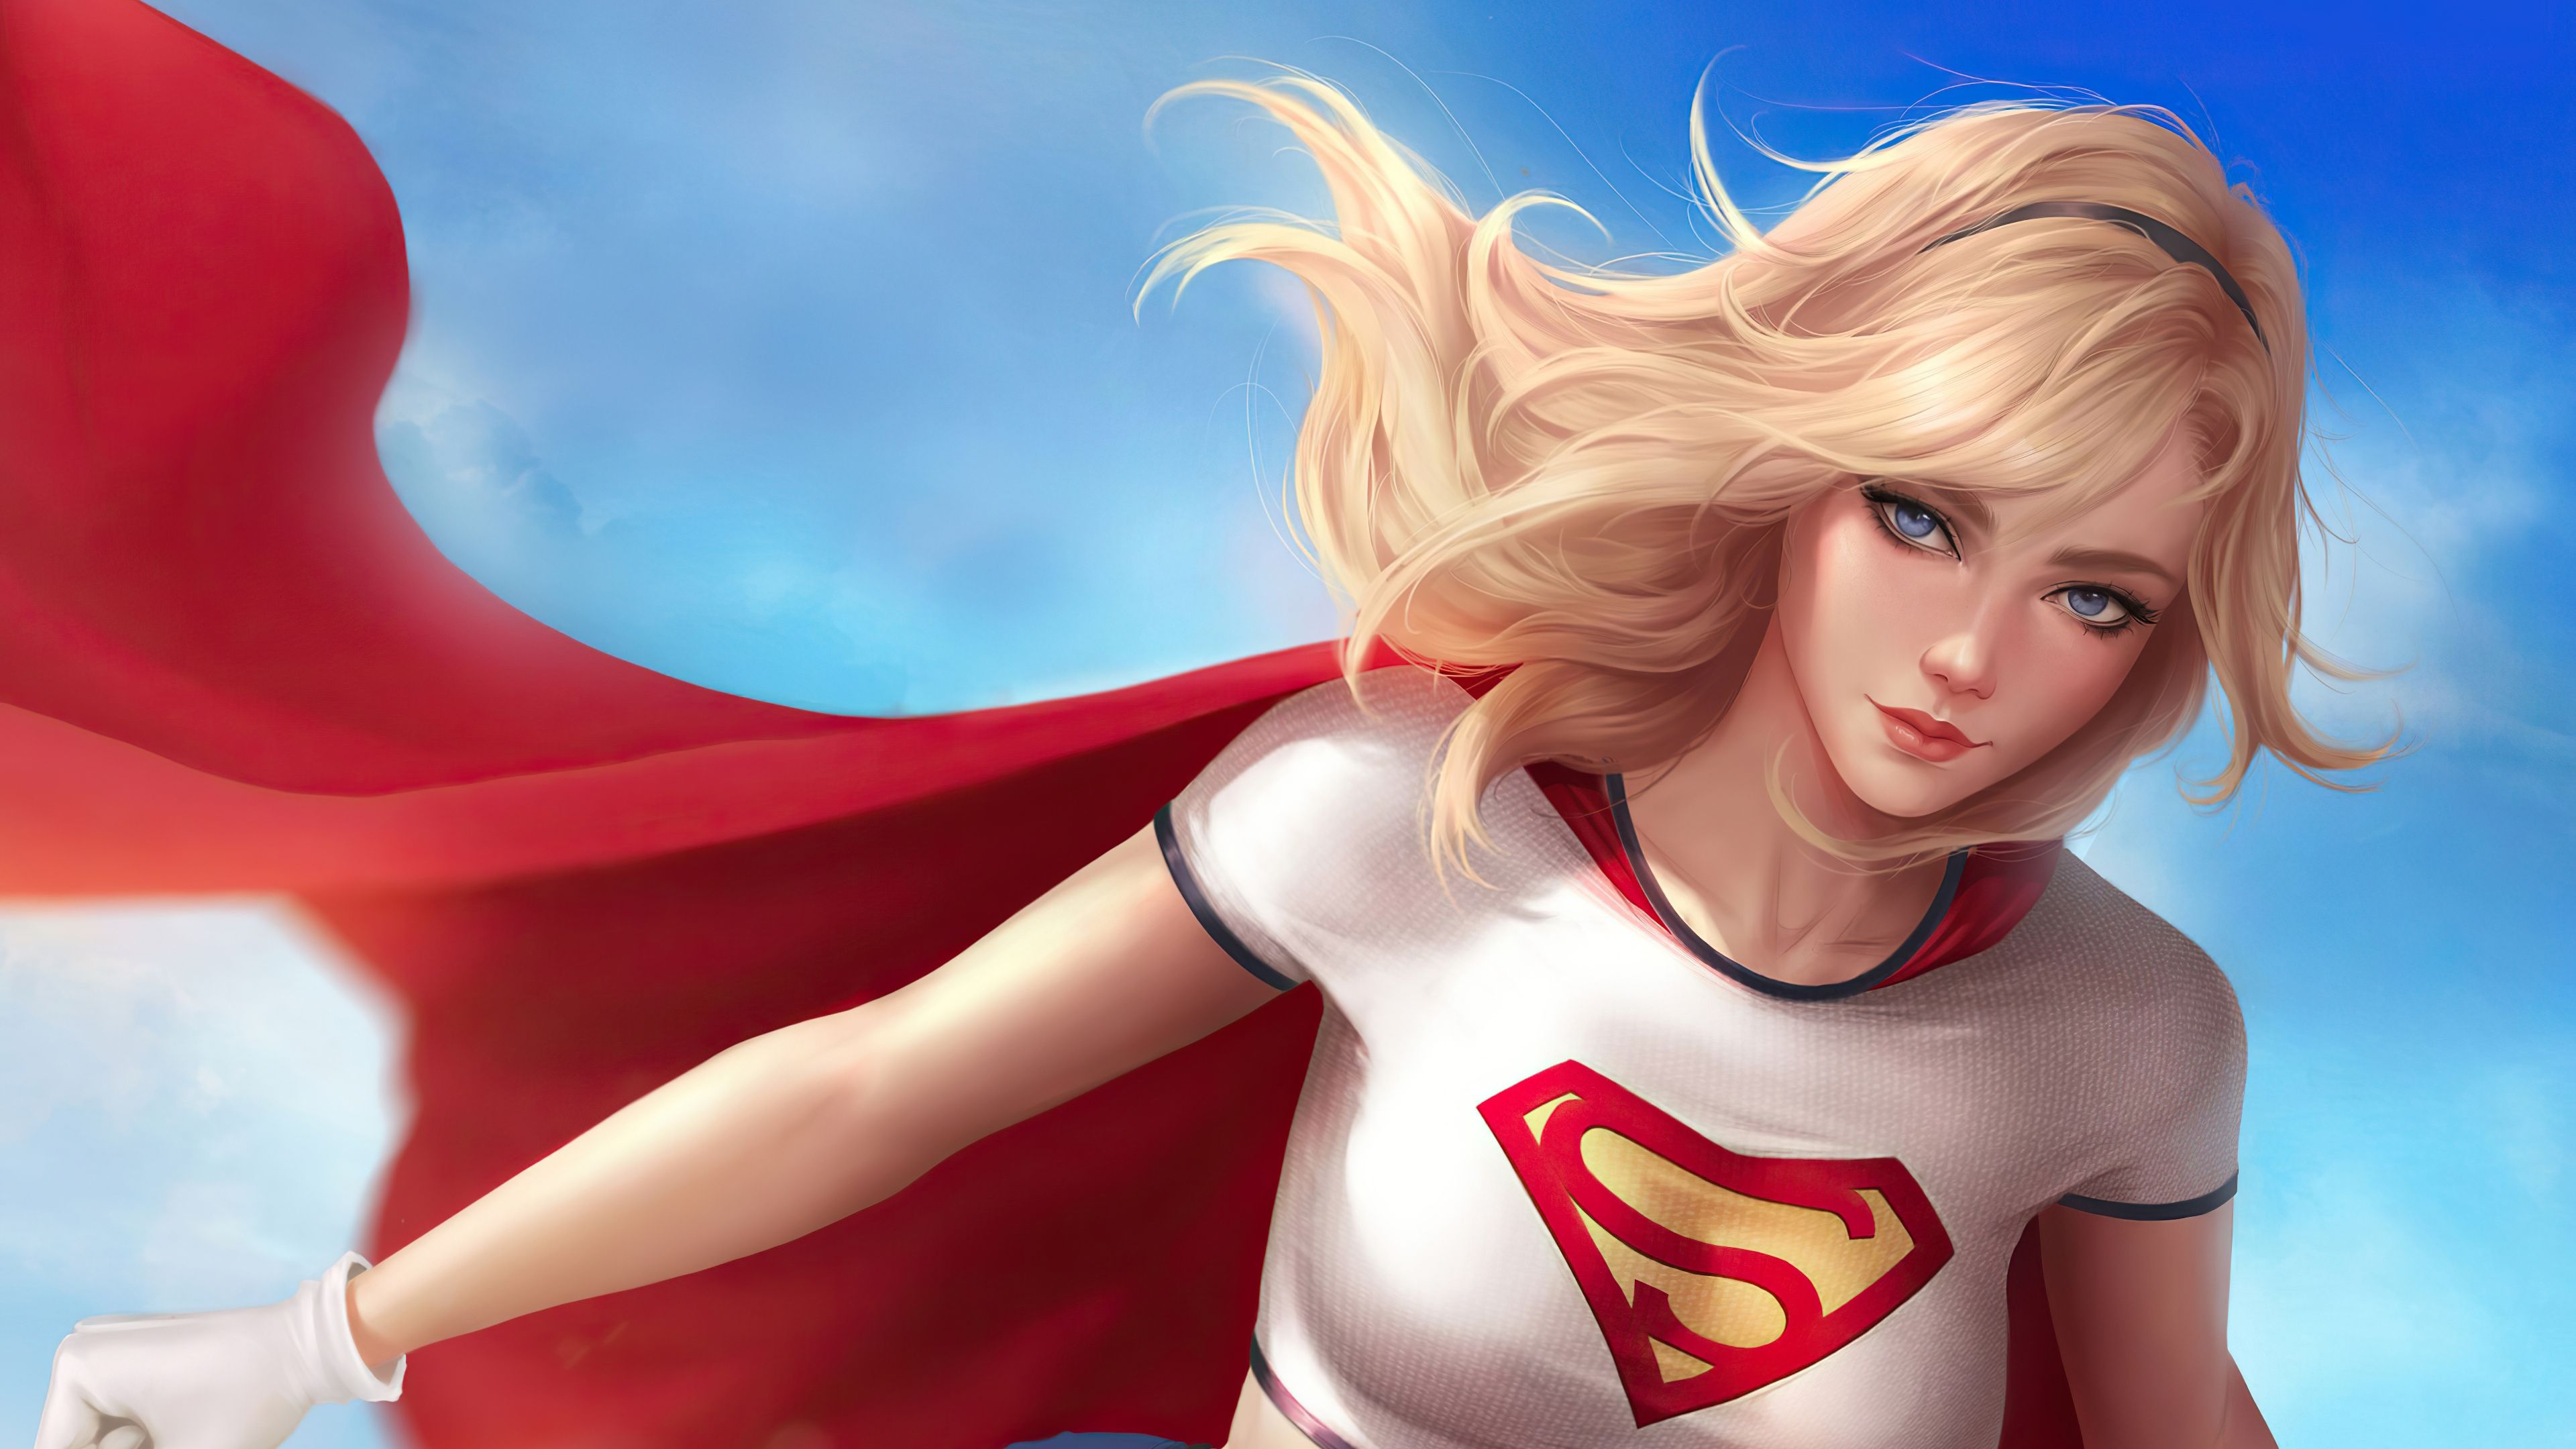 Supergirl Artwork 2020 Wallpaper 4k Ultra HD